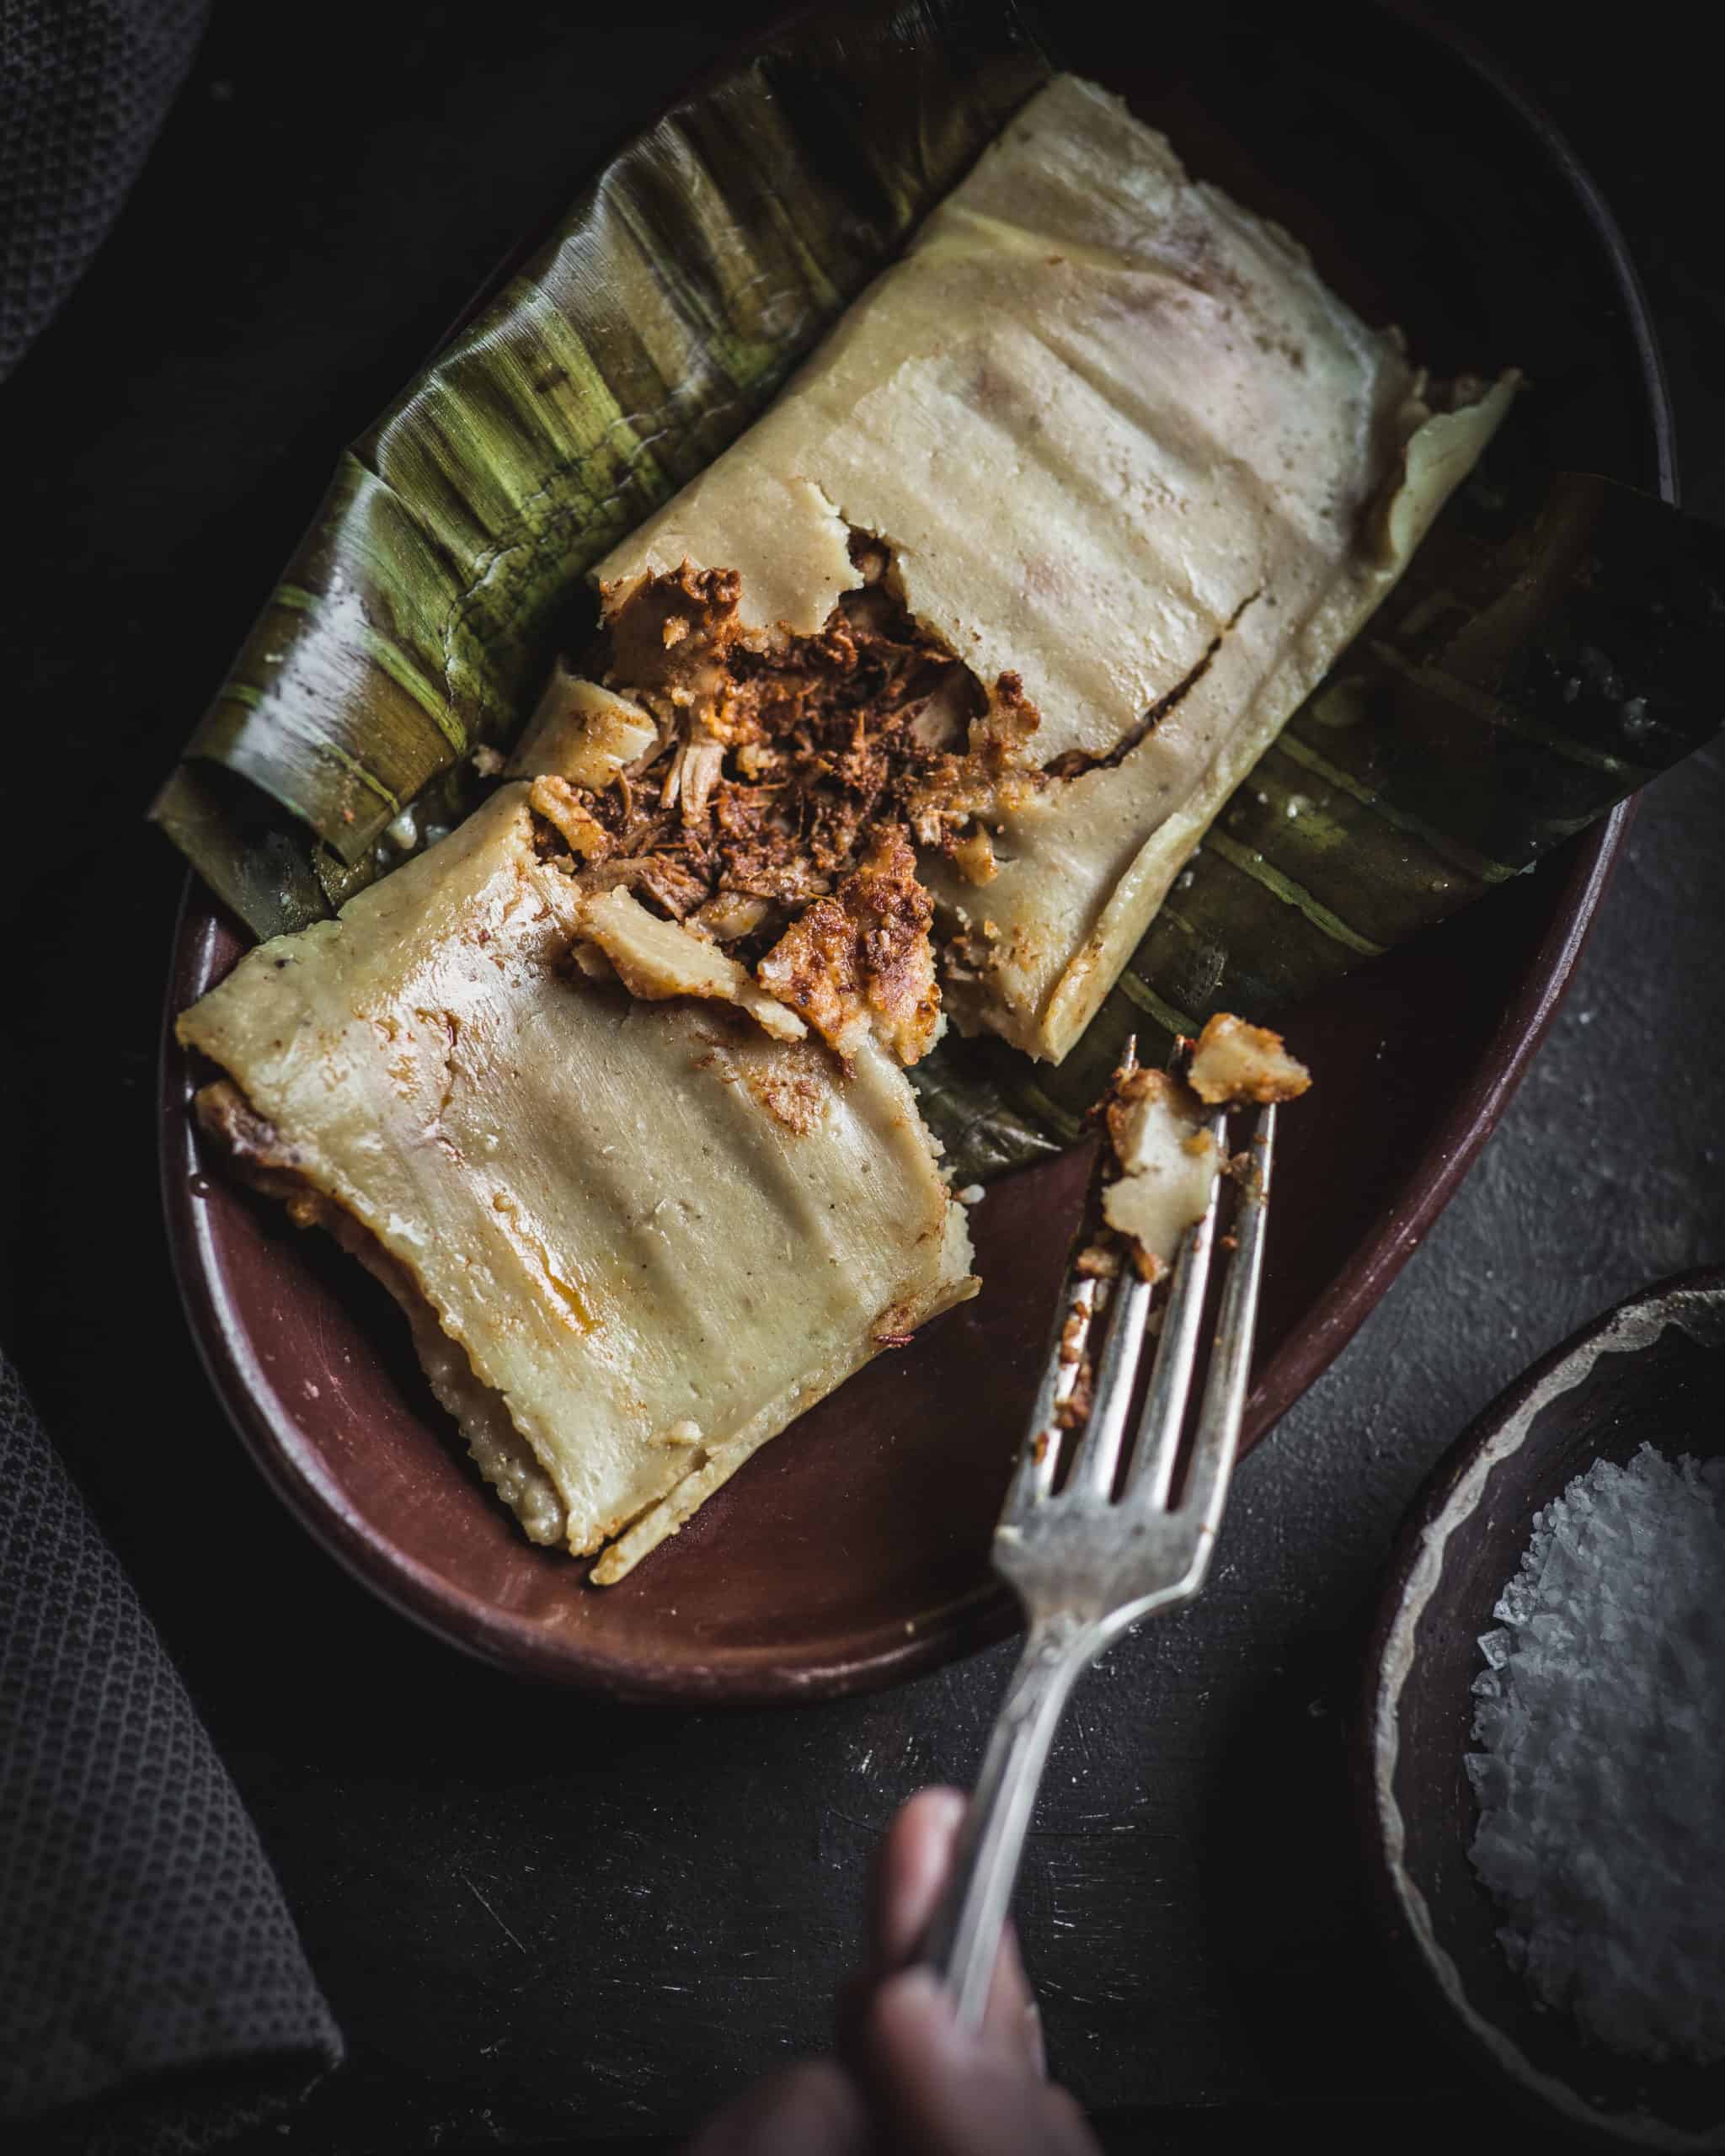 https://www.kitchenwrangler.com/wp-content/uploads/2019/01/Banana-Leaf-Tamales-Mole-Poblano-25-scaled.jpg